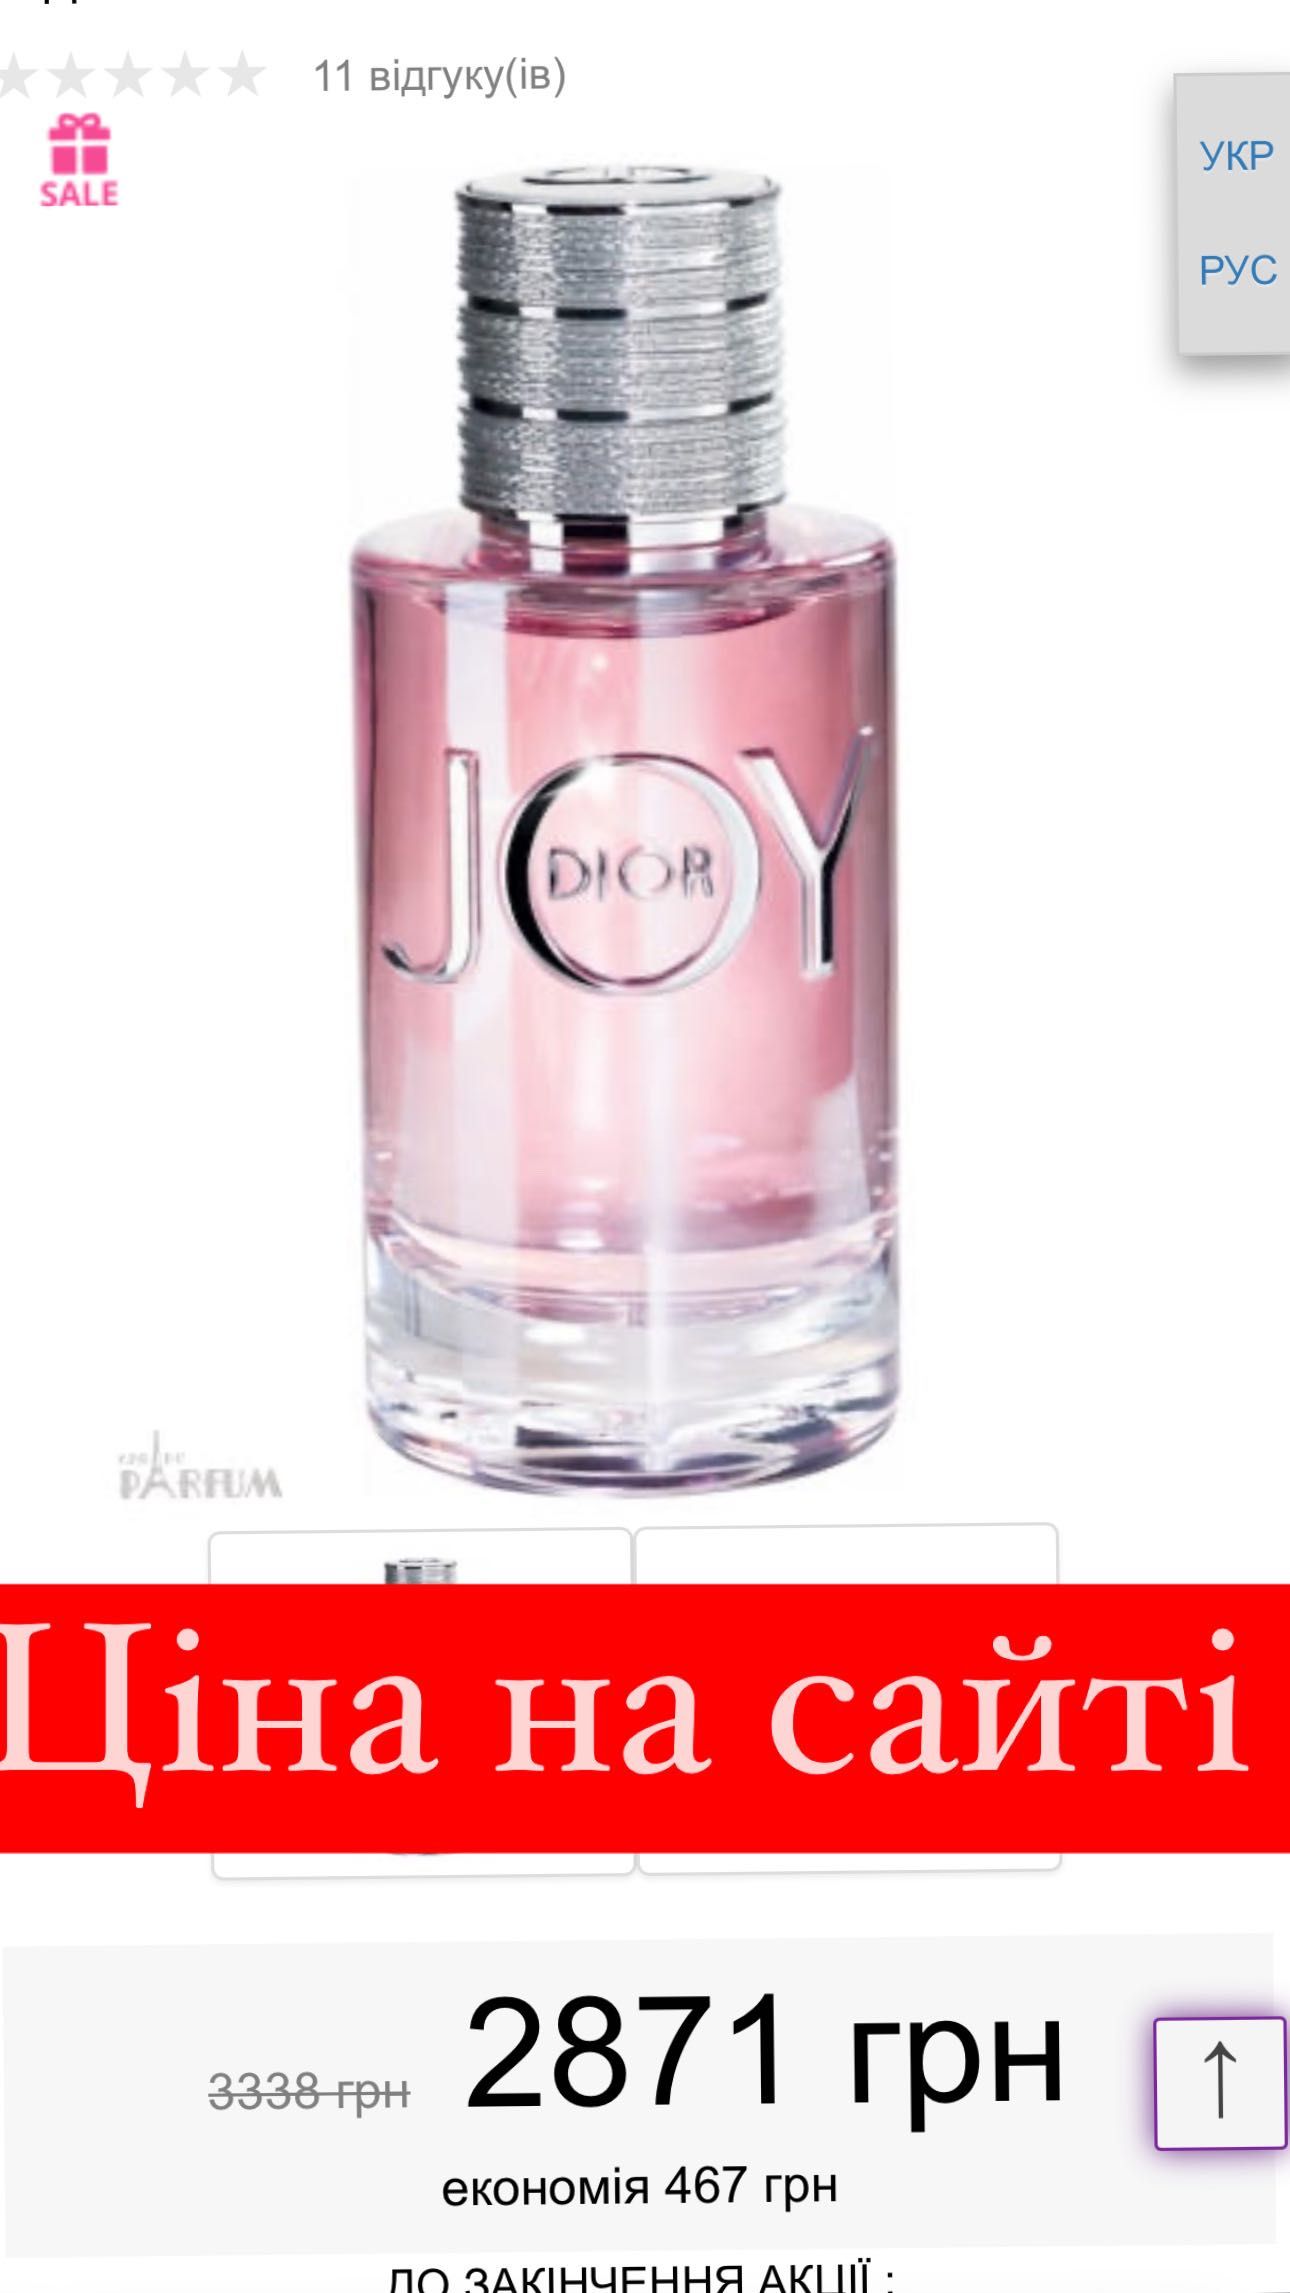 Christian Dior joy